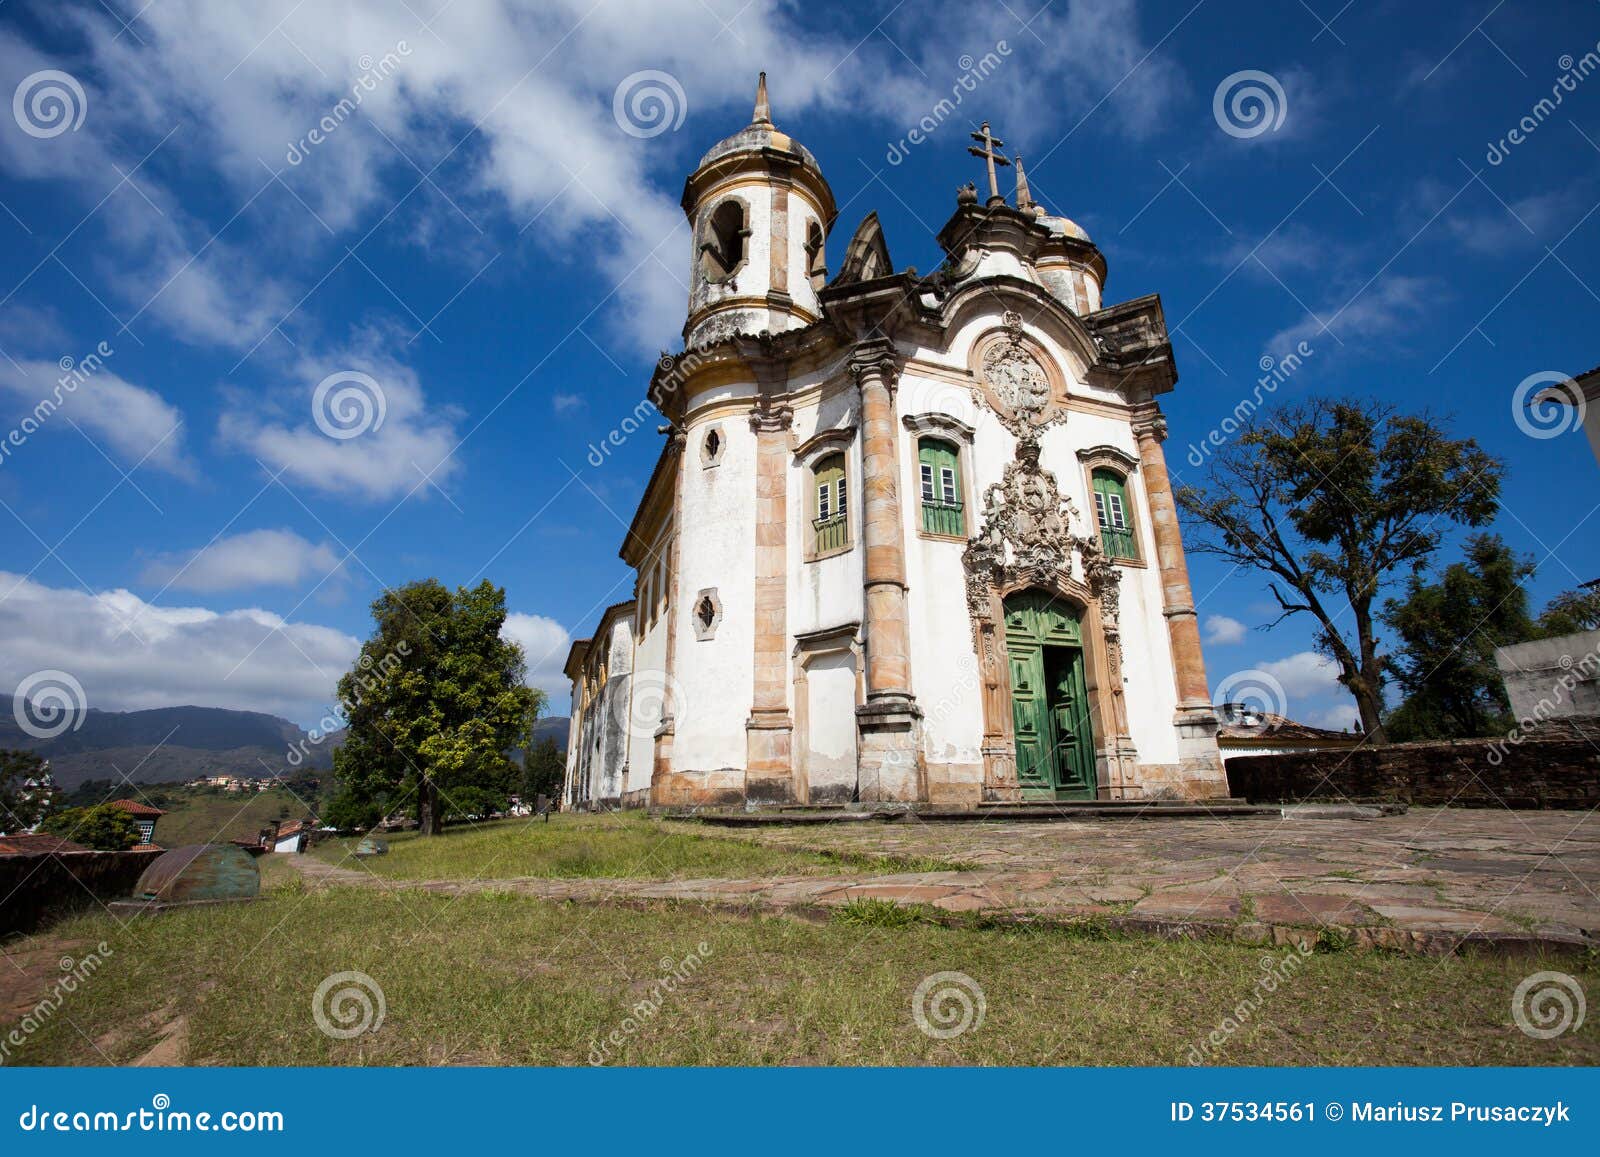 view of the igreja de sao francisco de assis of the unesco world heritage city of ouro preto in minas gerais brazil